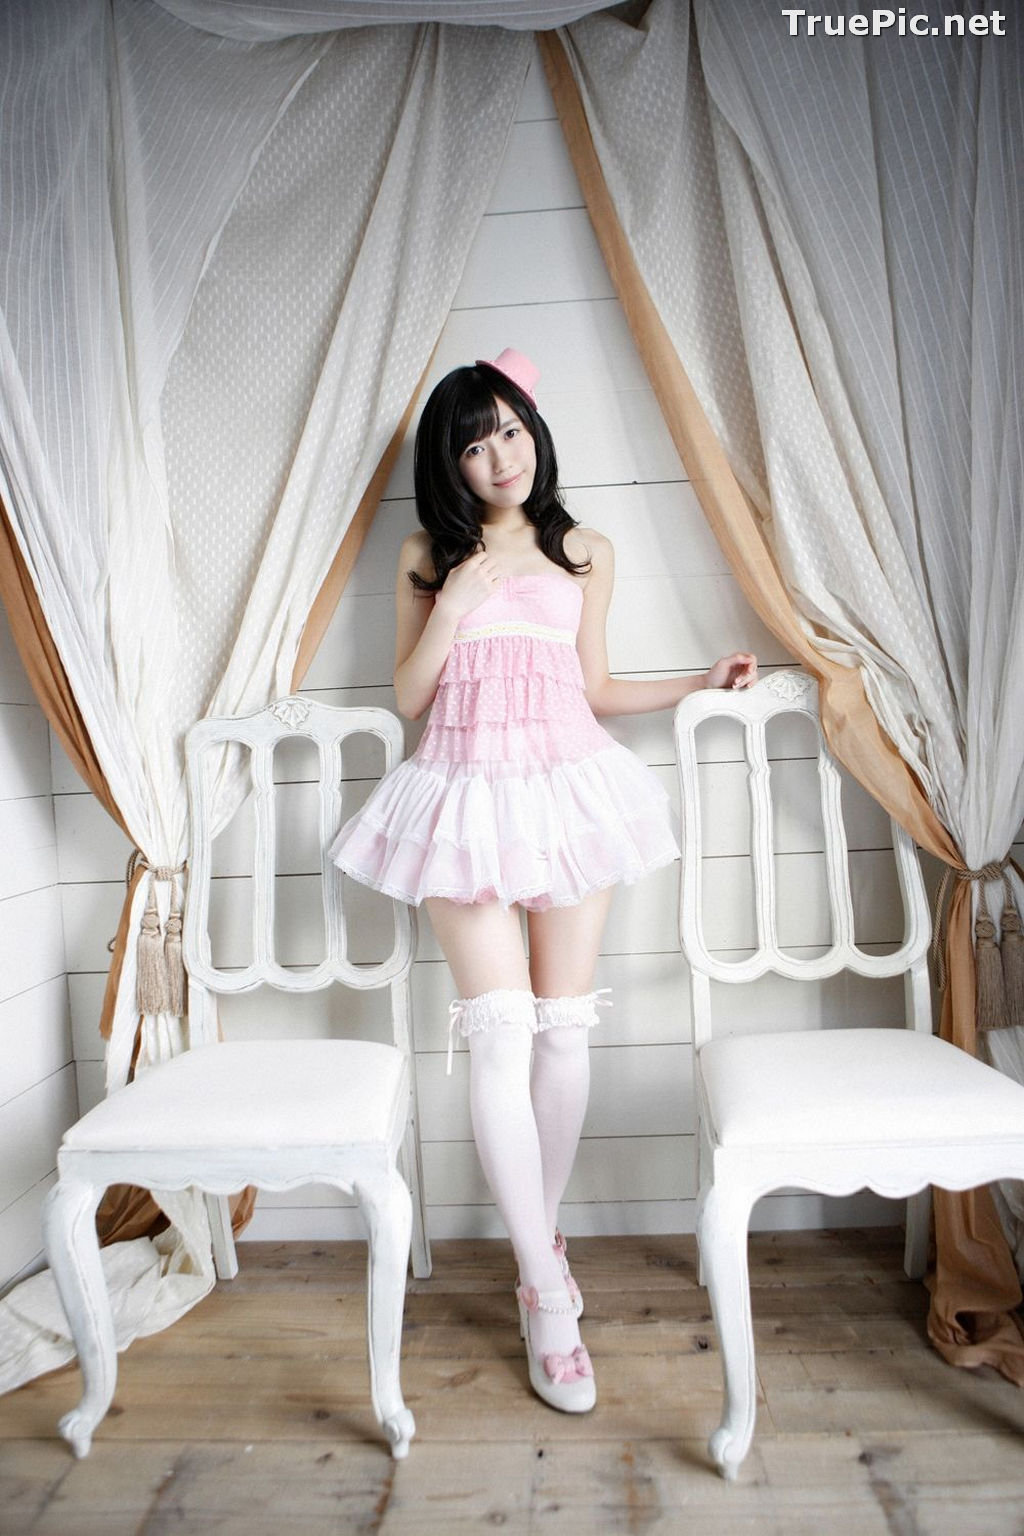 Image [YS Web] Vol.531 - Japanese Idol Girl Group (AKB48) - Mayu Watanabe - TruePic.net - Picture-33